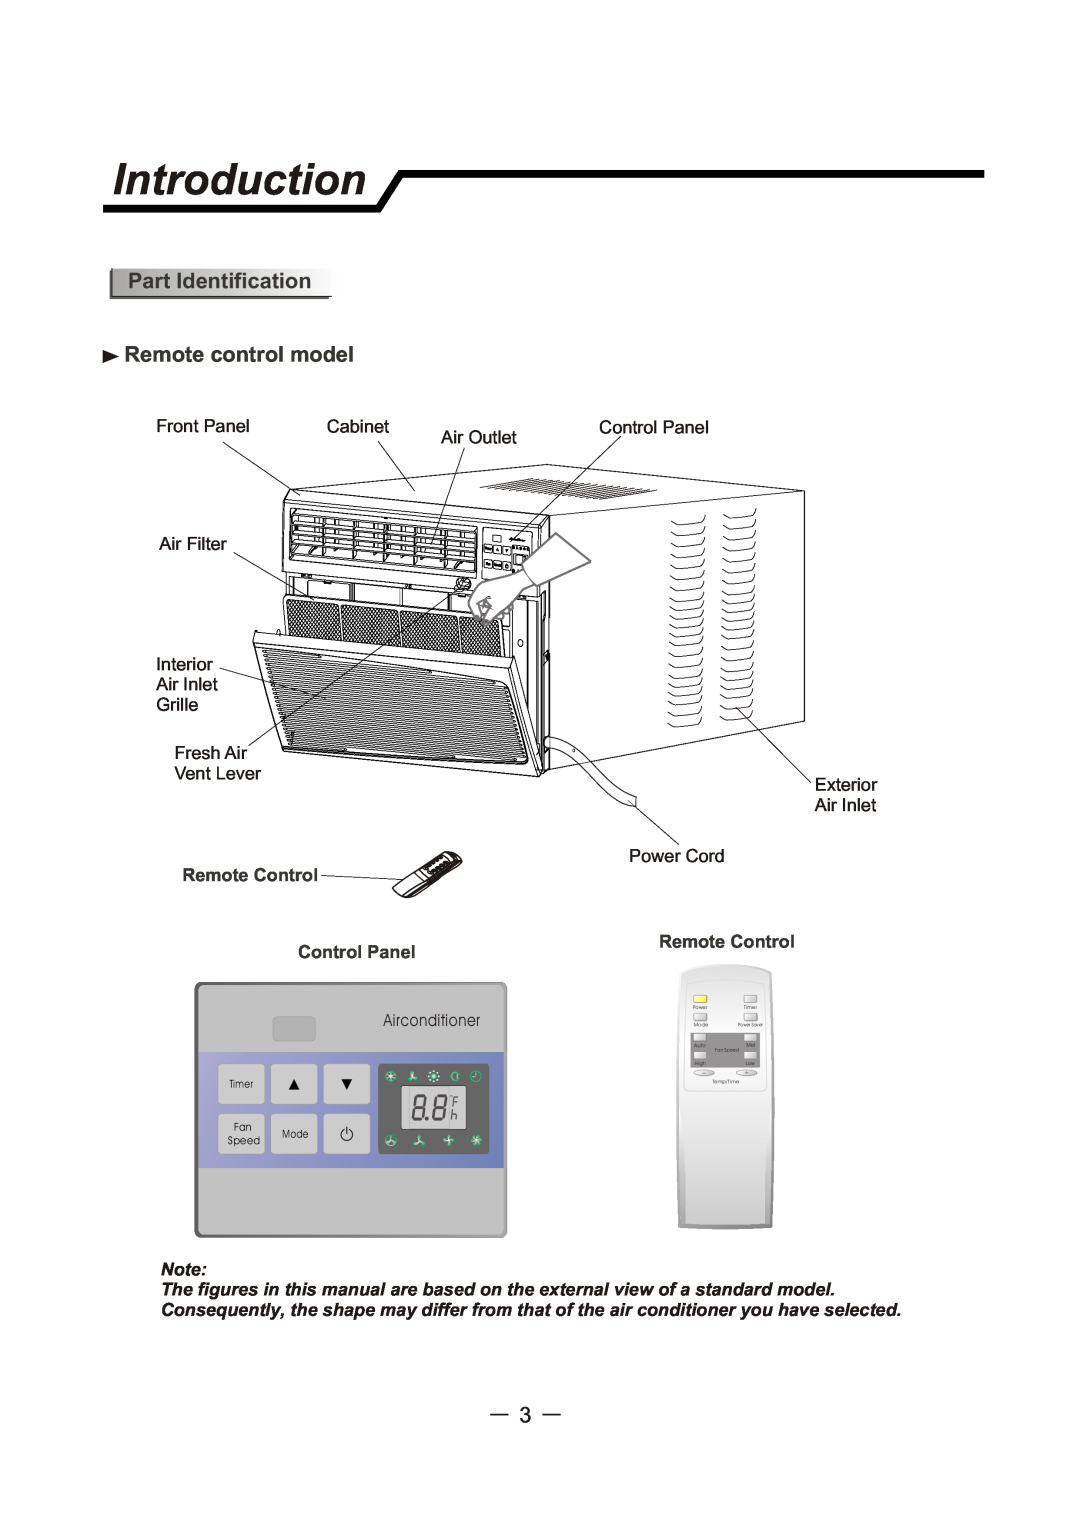 Sunbeam SCA103RWB1 Part Identification Remote control model, Introduction, Remote Control Control Panel, PowerTimer, Mode 